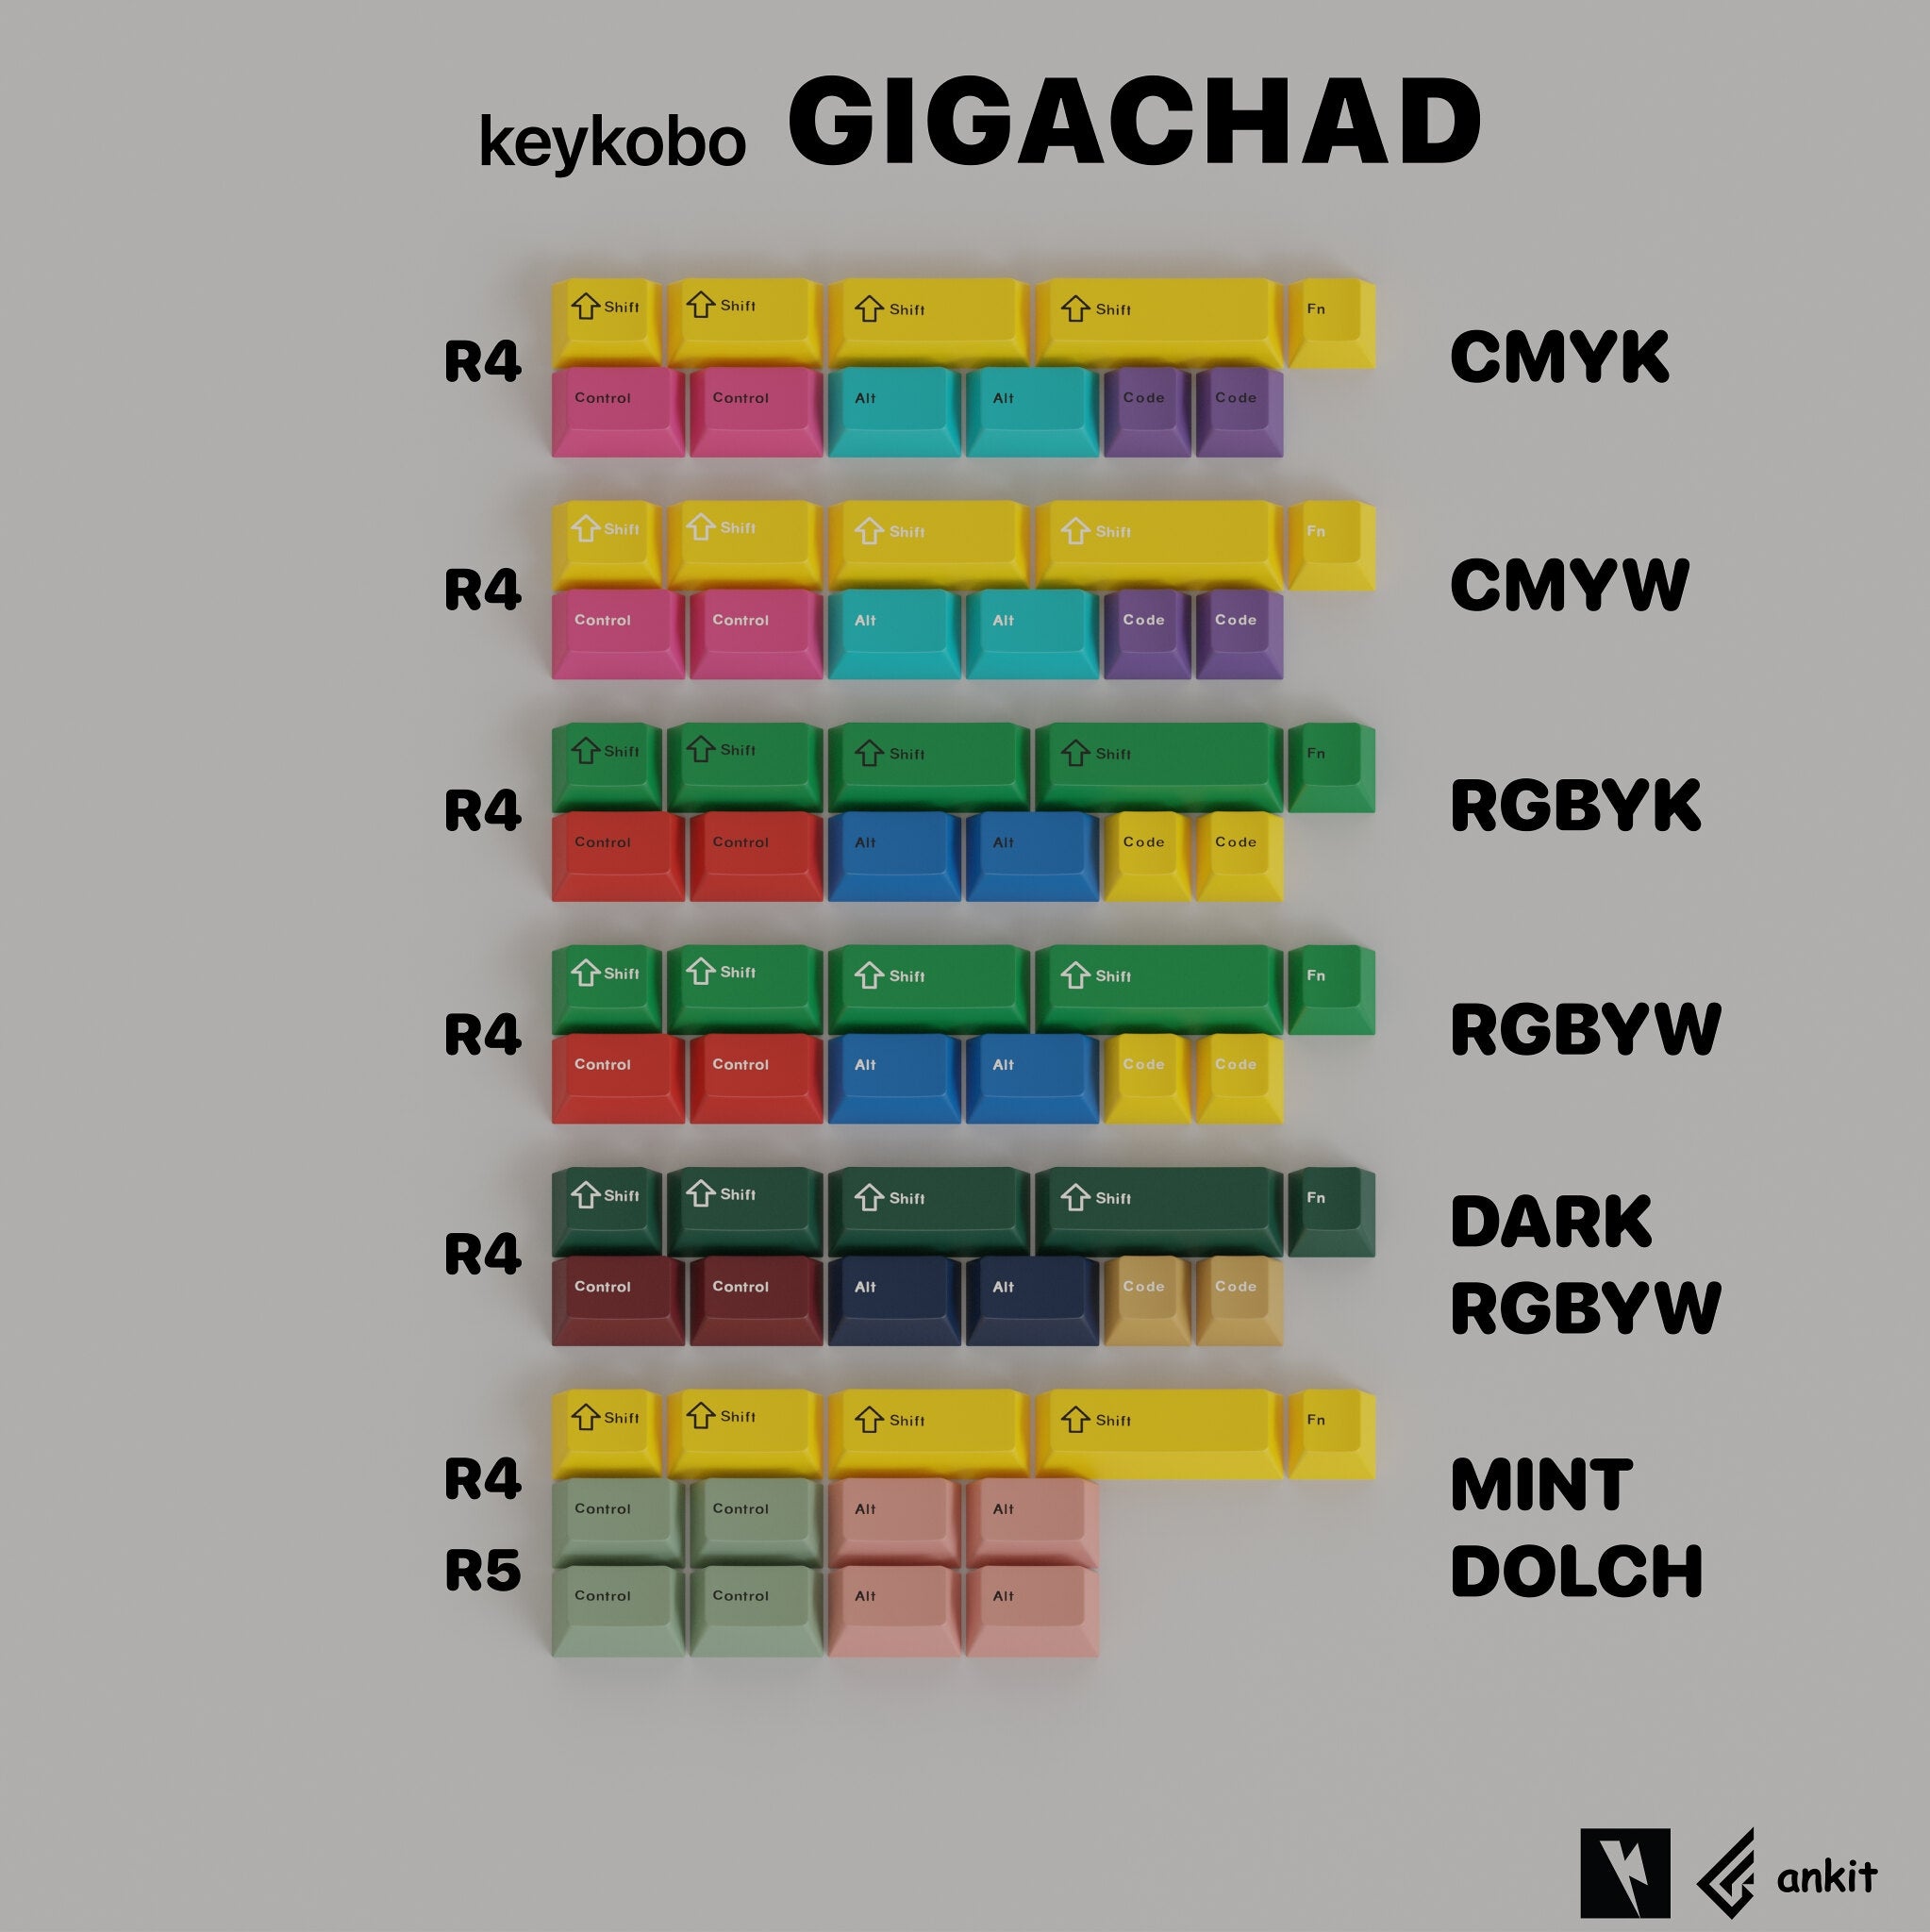 Keykobo GIGACHAD/GIGACHILD (Ended)